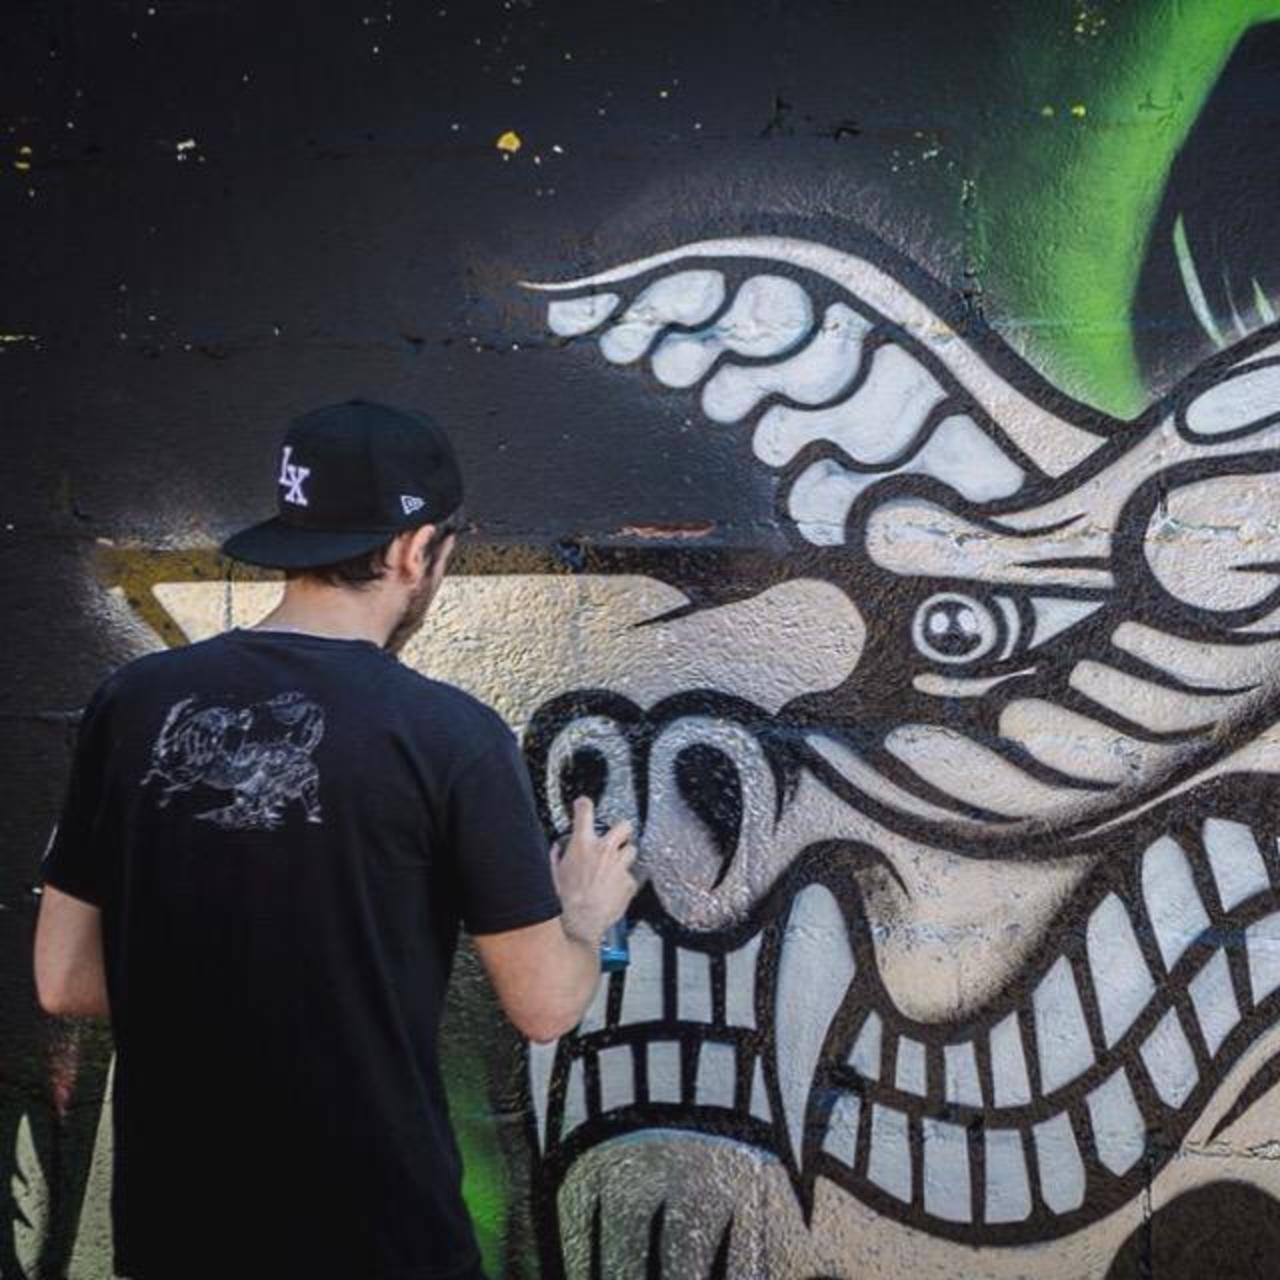 #tosco #xoscx #graffiti #streetart #urbanart #mural #chrome #lx #lisbon #dublin # # # # # #  http://t.co/pEc7pvxdIa